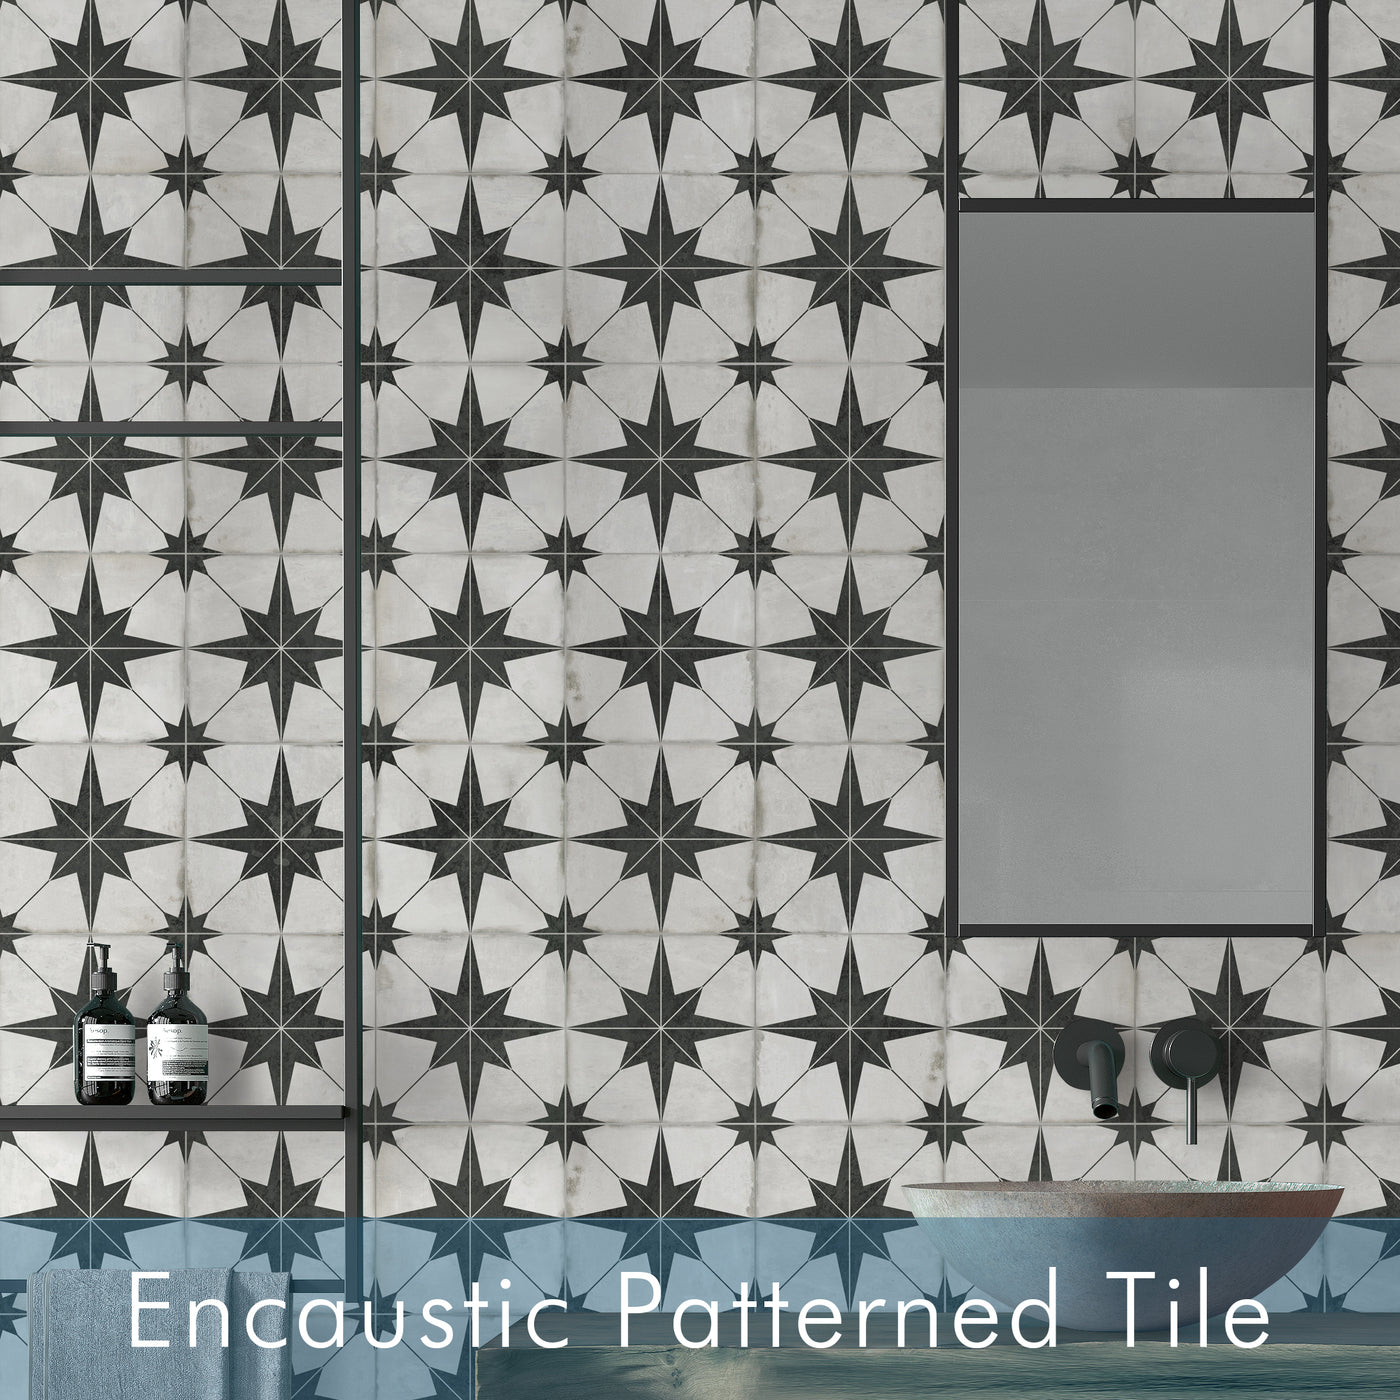 Encaustic Patterned Tile